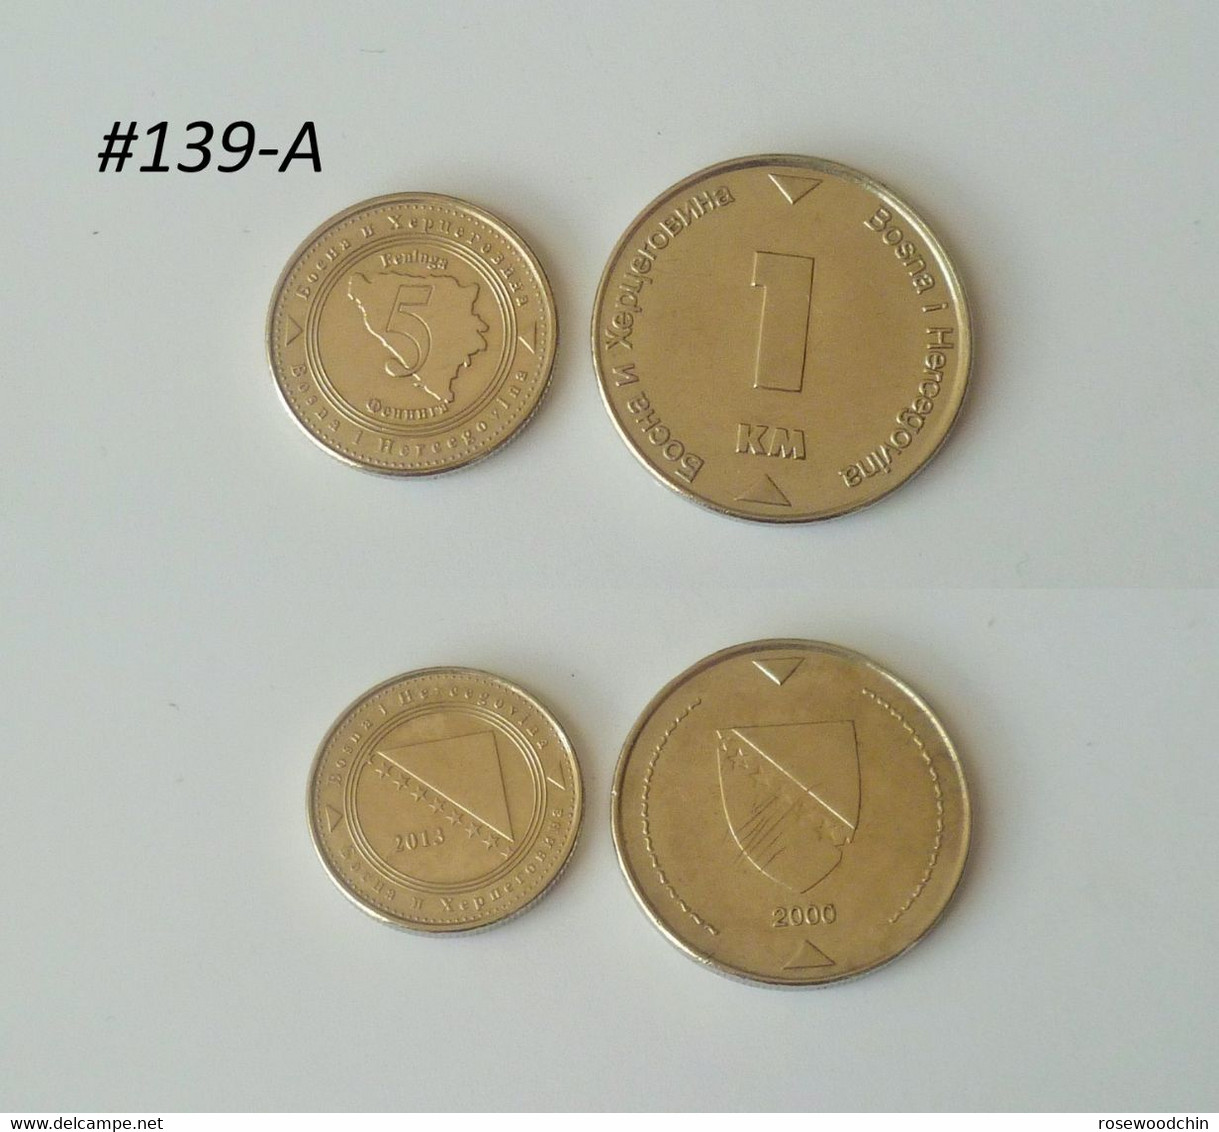 Vintage ! One Lot Of Bosna /Bosnia 2000- 1 Mark & 2013- 5 Feninga Coin (#139-A) - Bosnien-Herzegowina